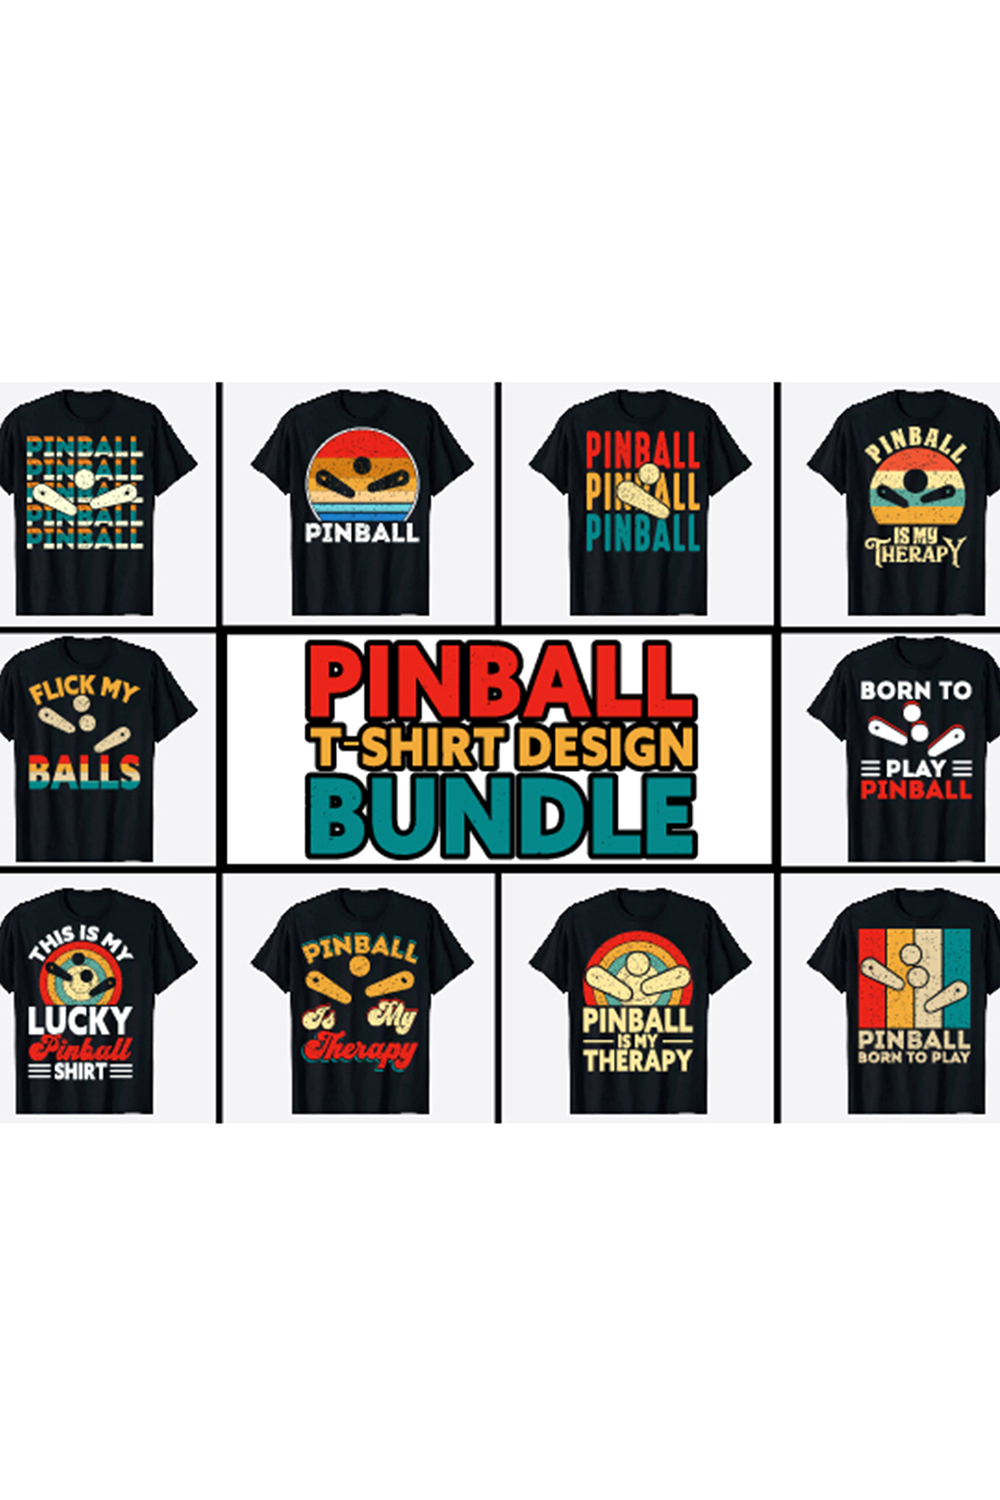 Pinball T-shirt Design Bundle - pinterest image preview.